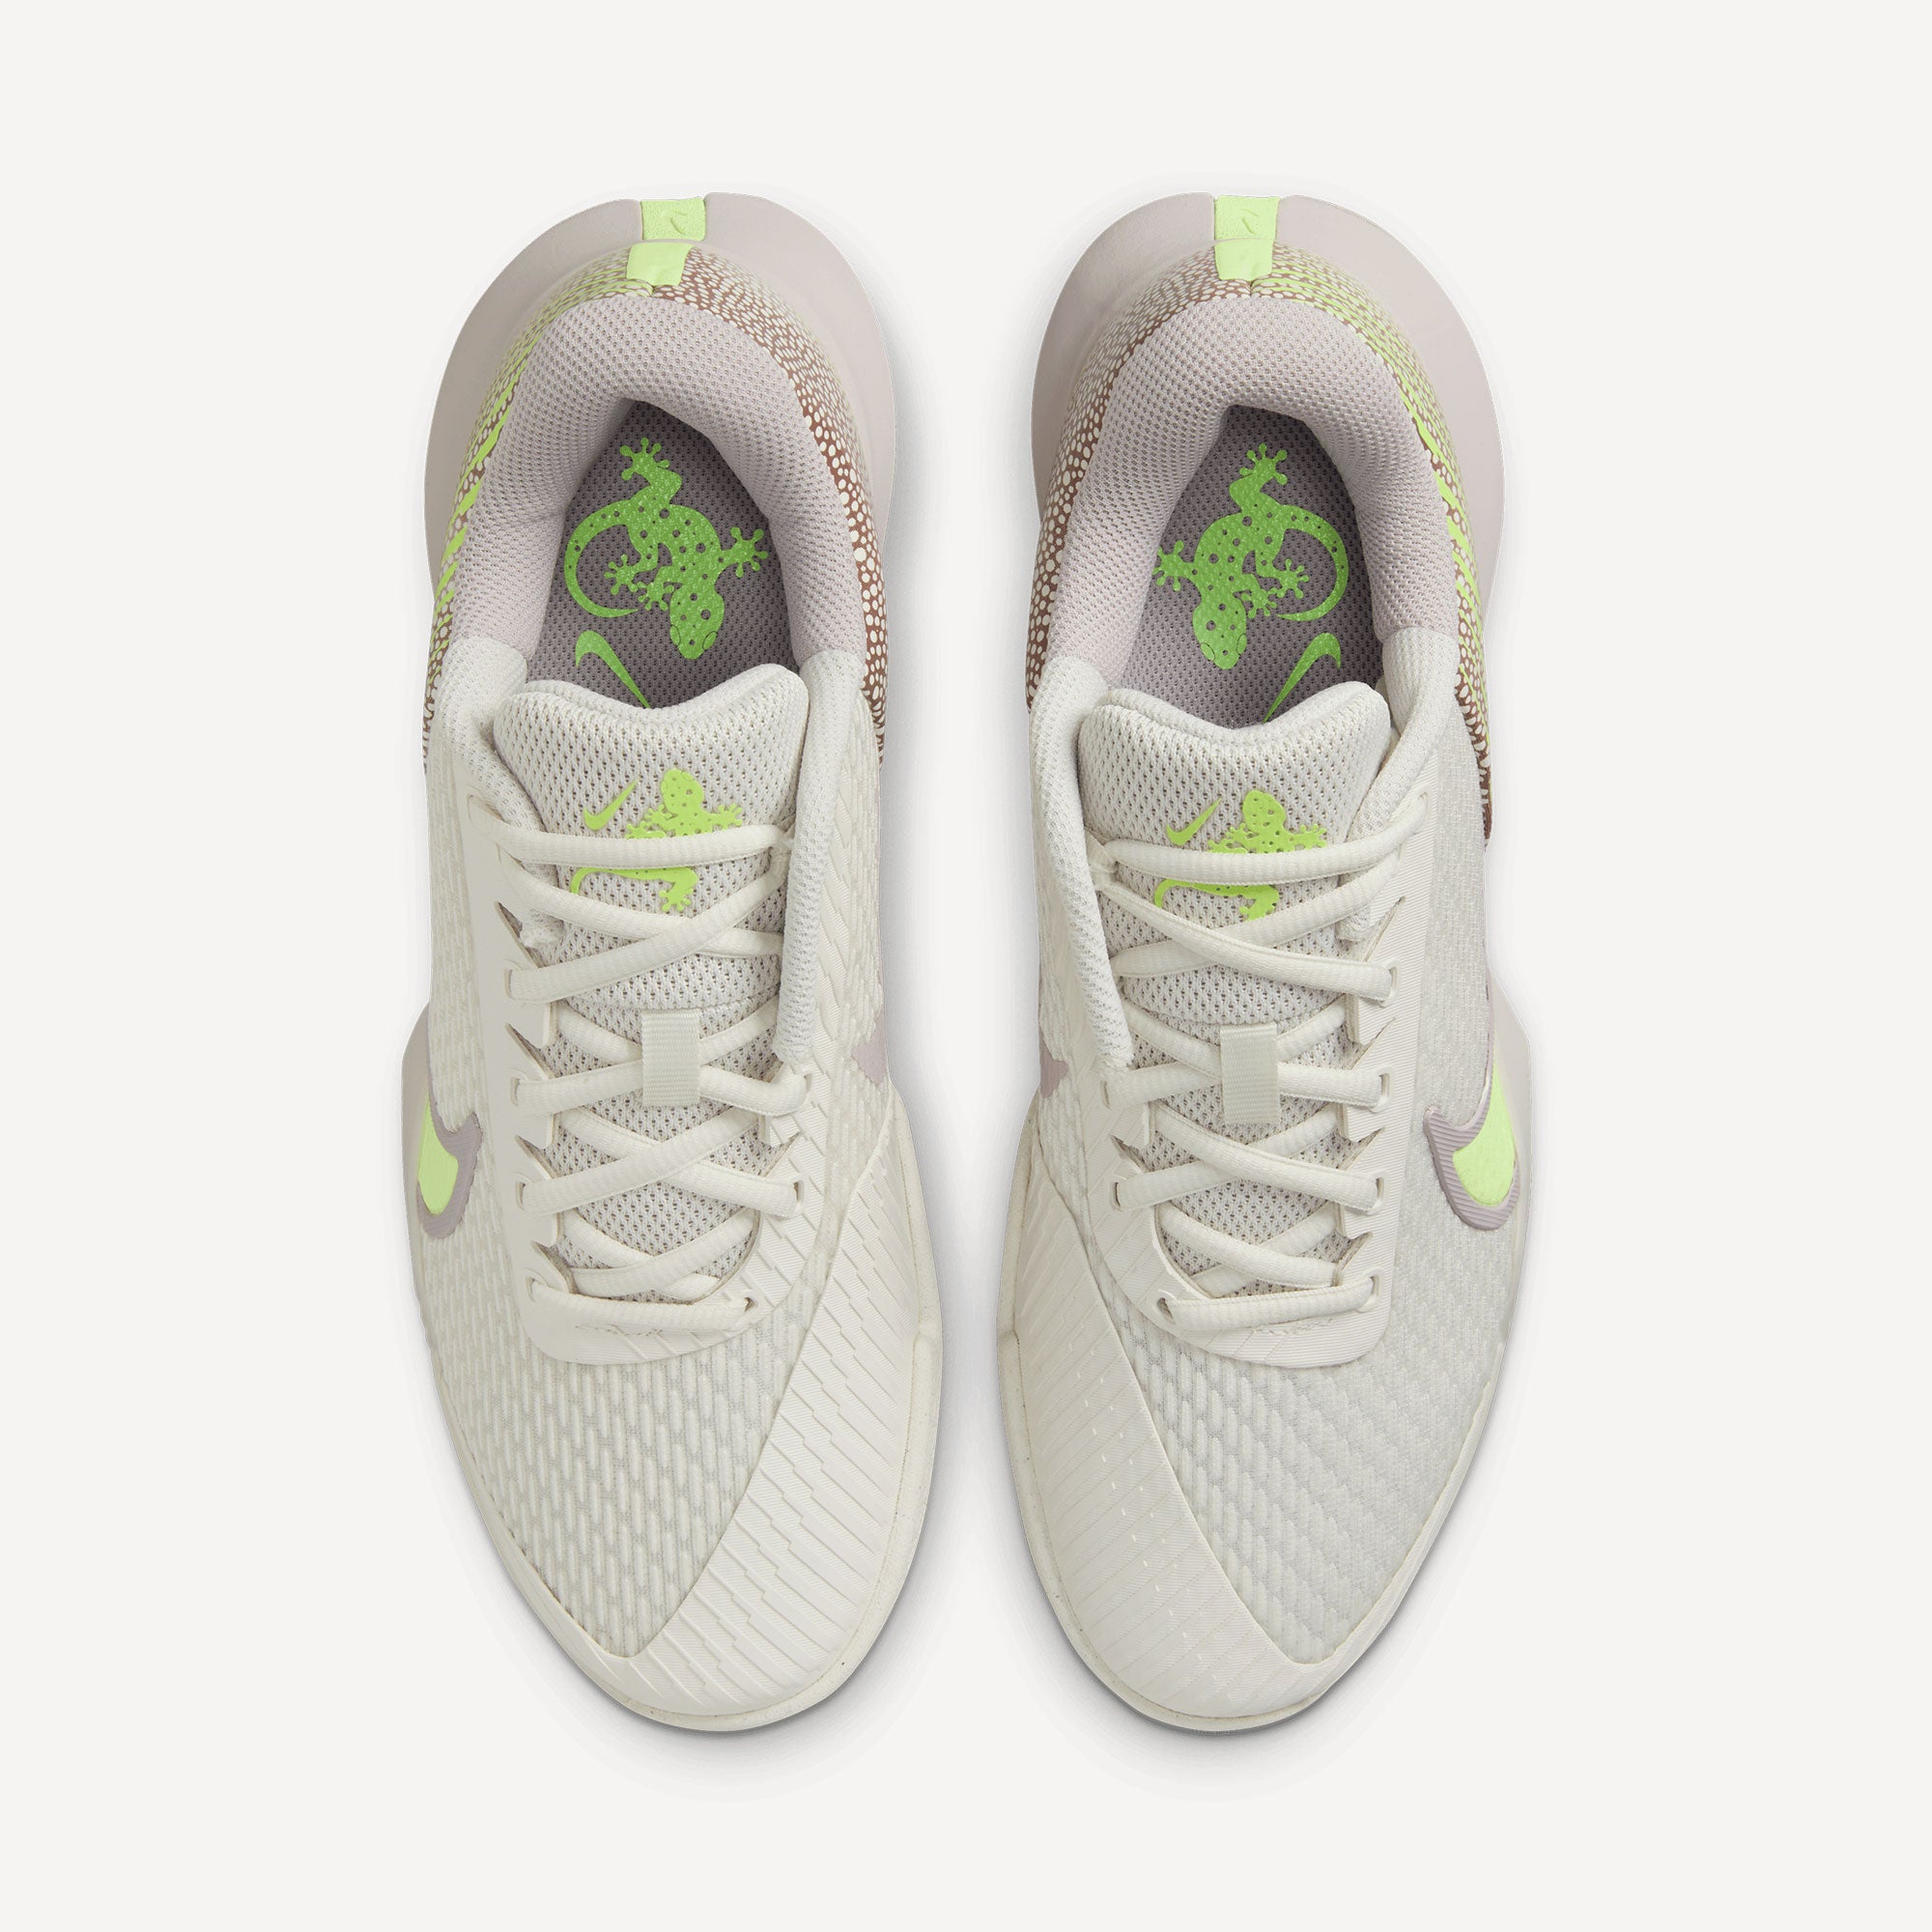 NikeCourt Air Zoom Vapor Pro 2 Premium Women's Hard Court Tennis Shoes - Grey (6)